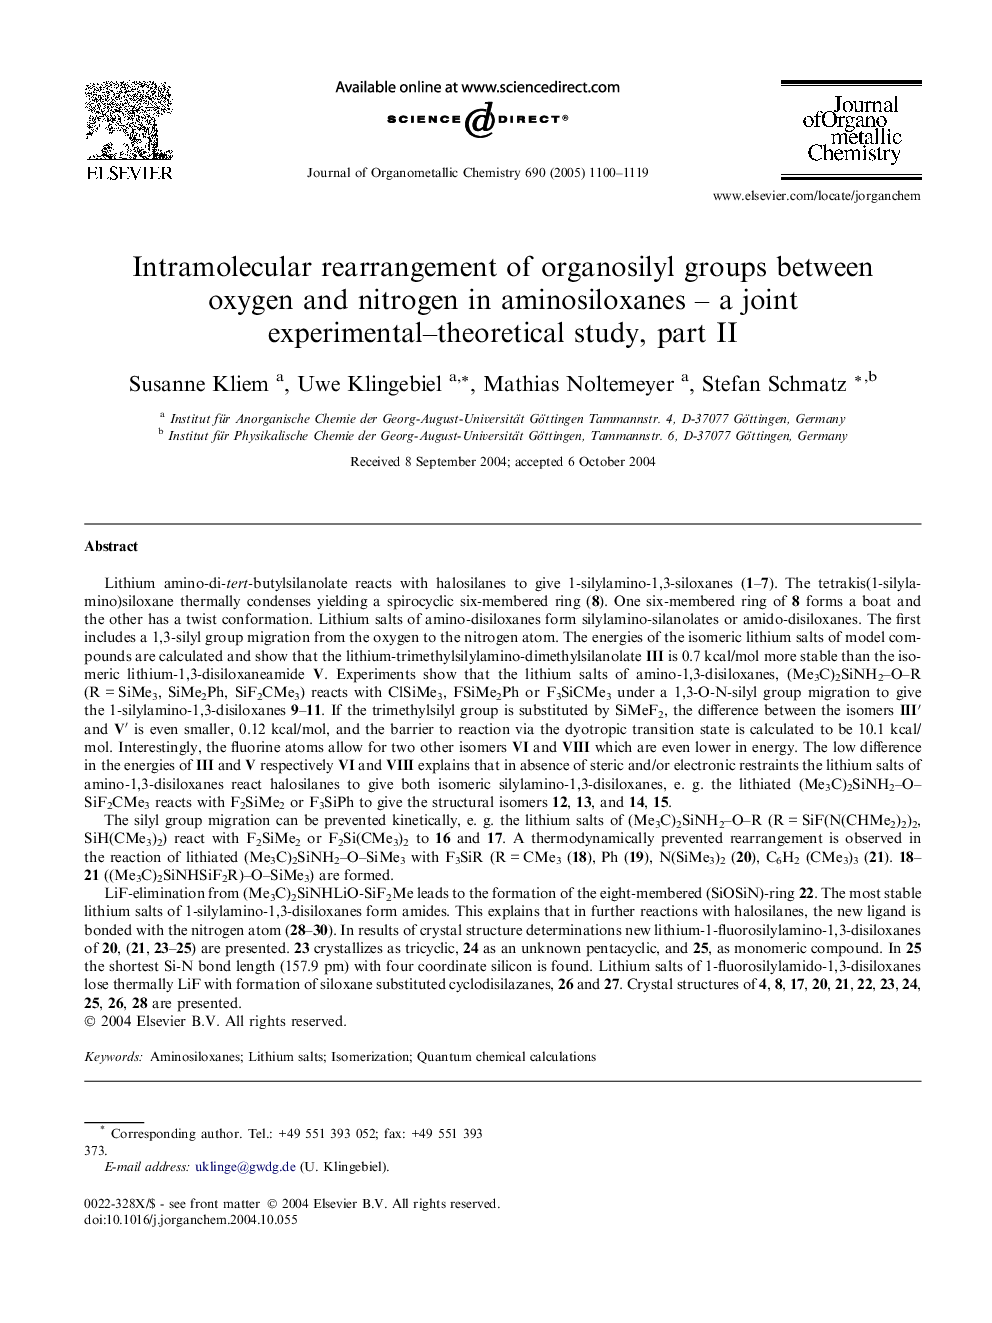 Intramolecular rearrangement of organosilyl groups between oxygen and nitrogen in aminosiloxanes - a joint experimental-theoretical study, part II